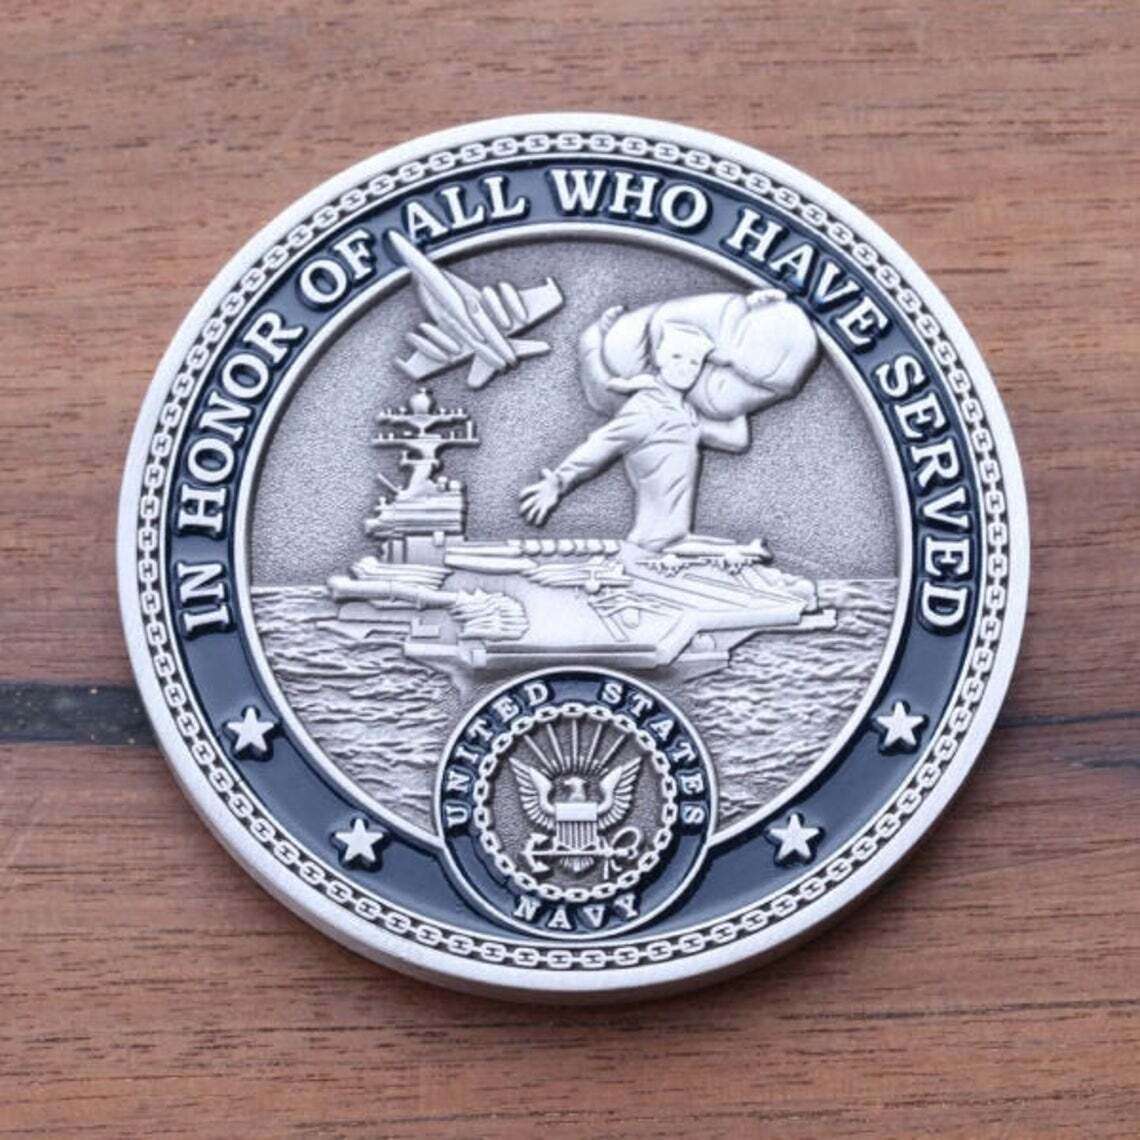 US Navy 2020 Birthday Challenge Coin